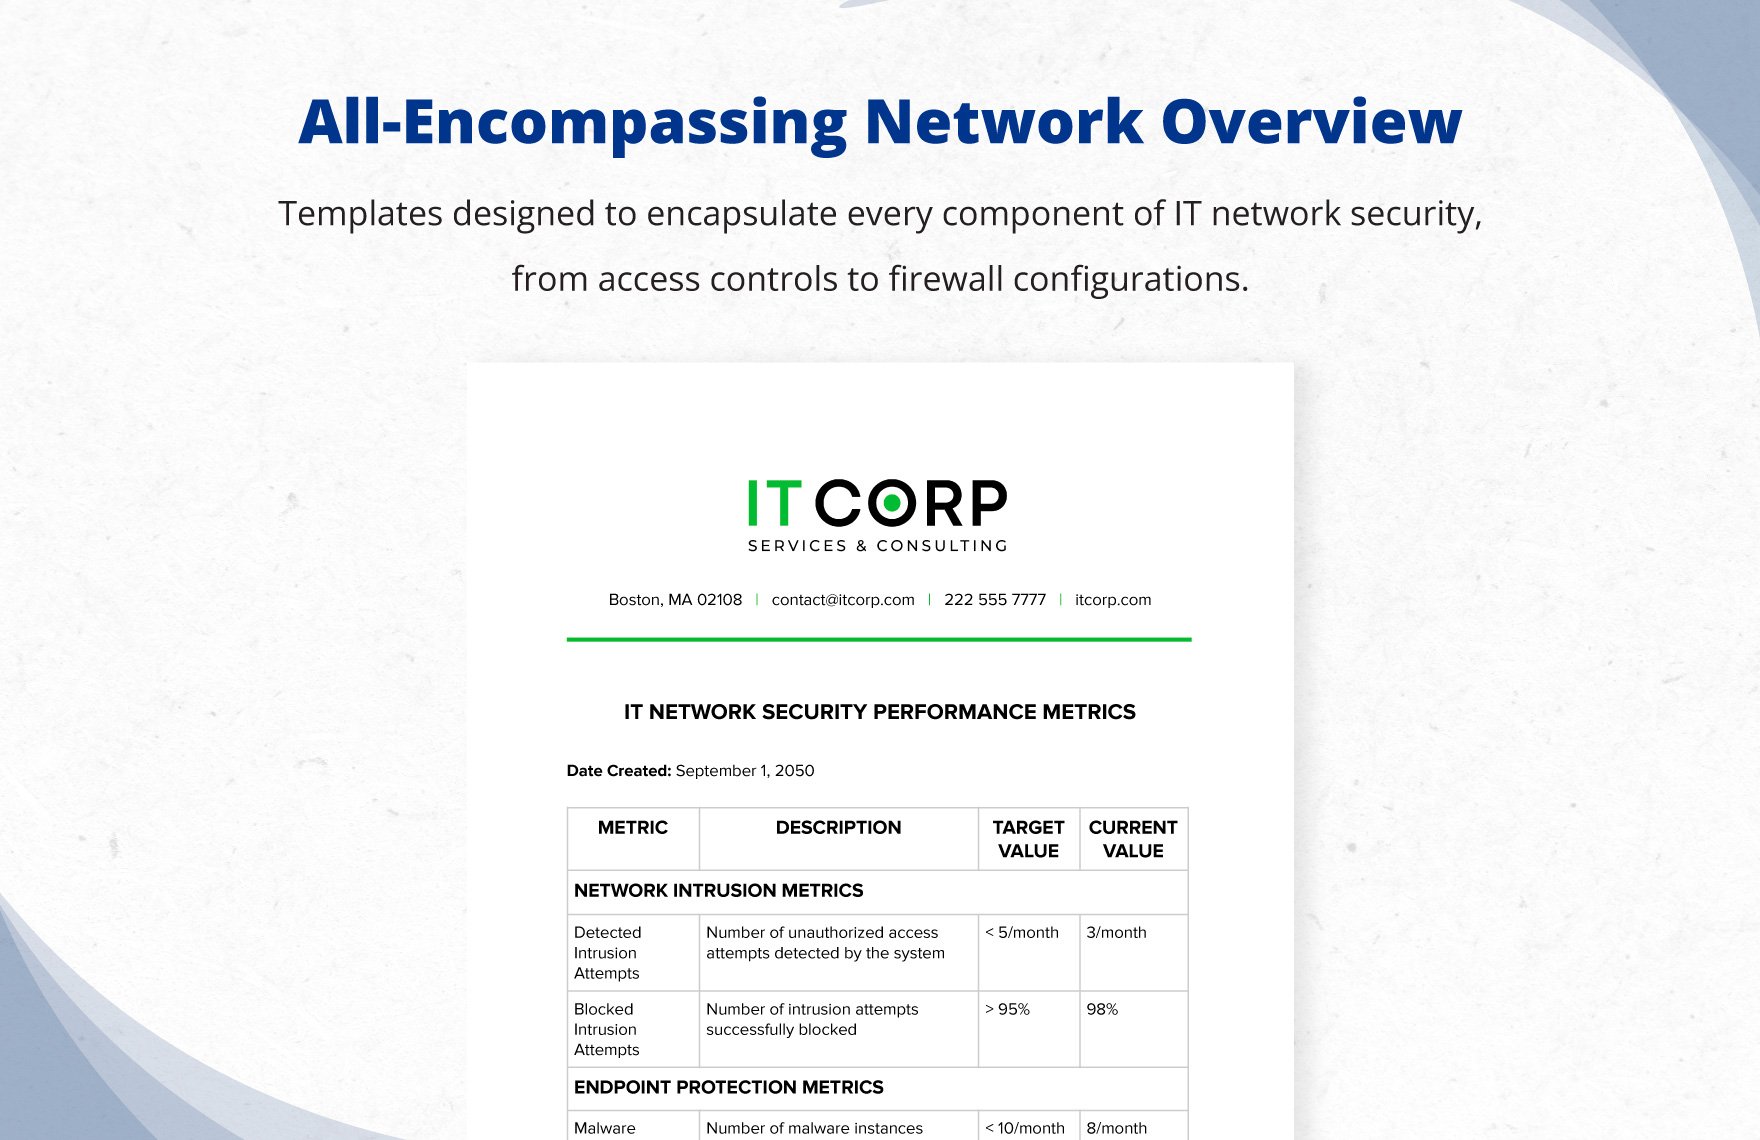 IT Network Security Performance Metrics Template